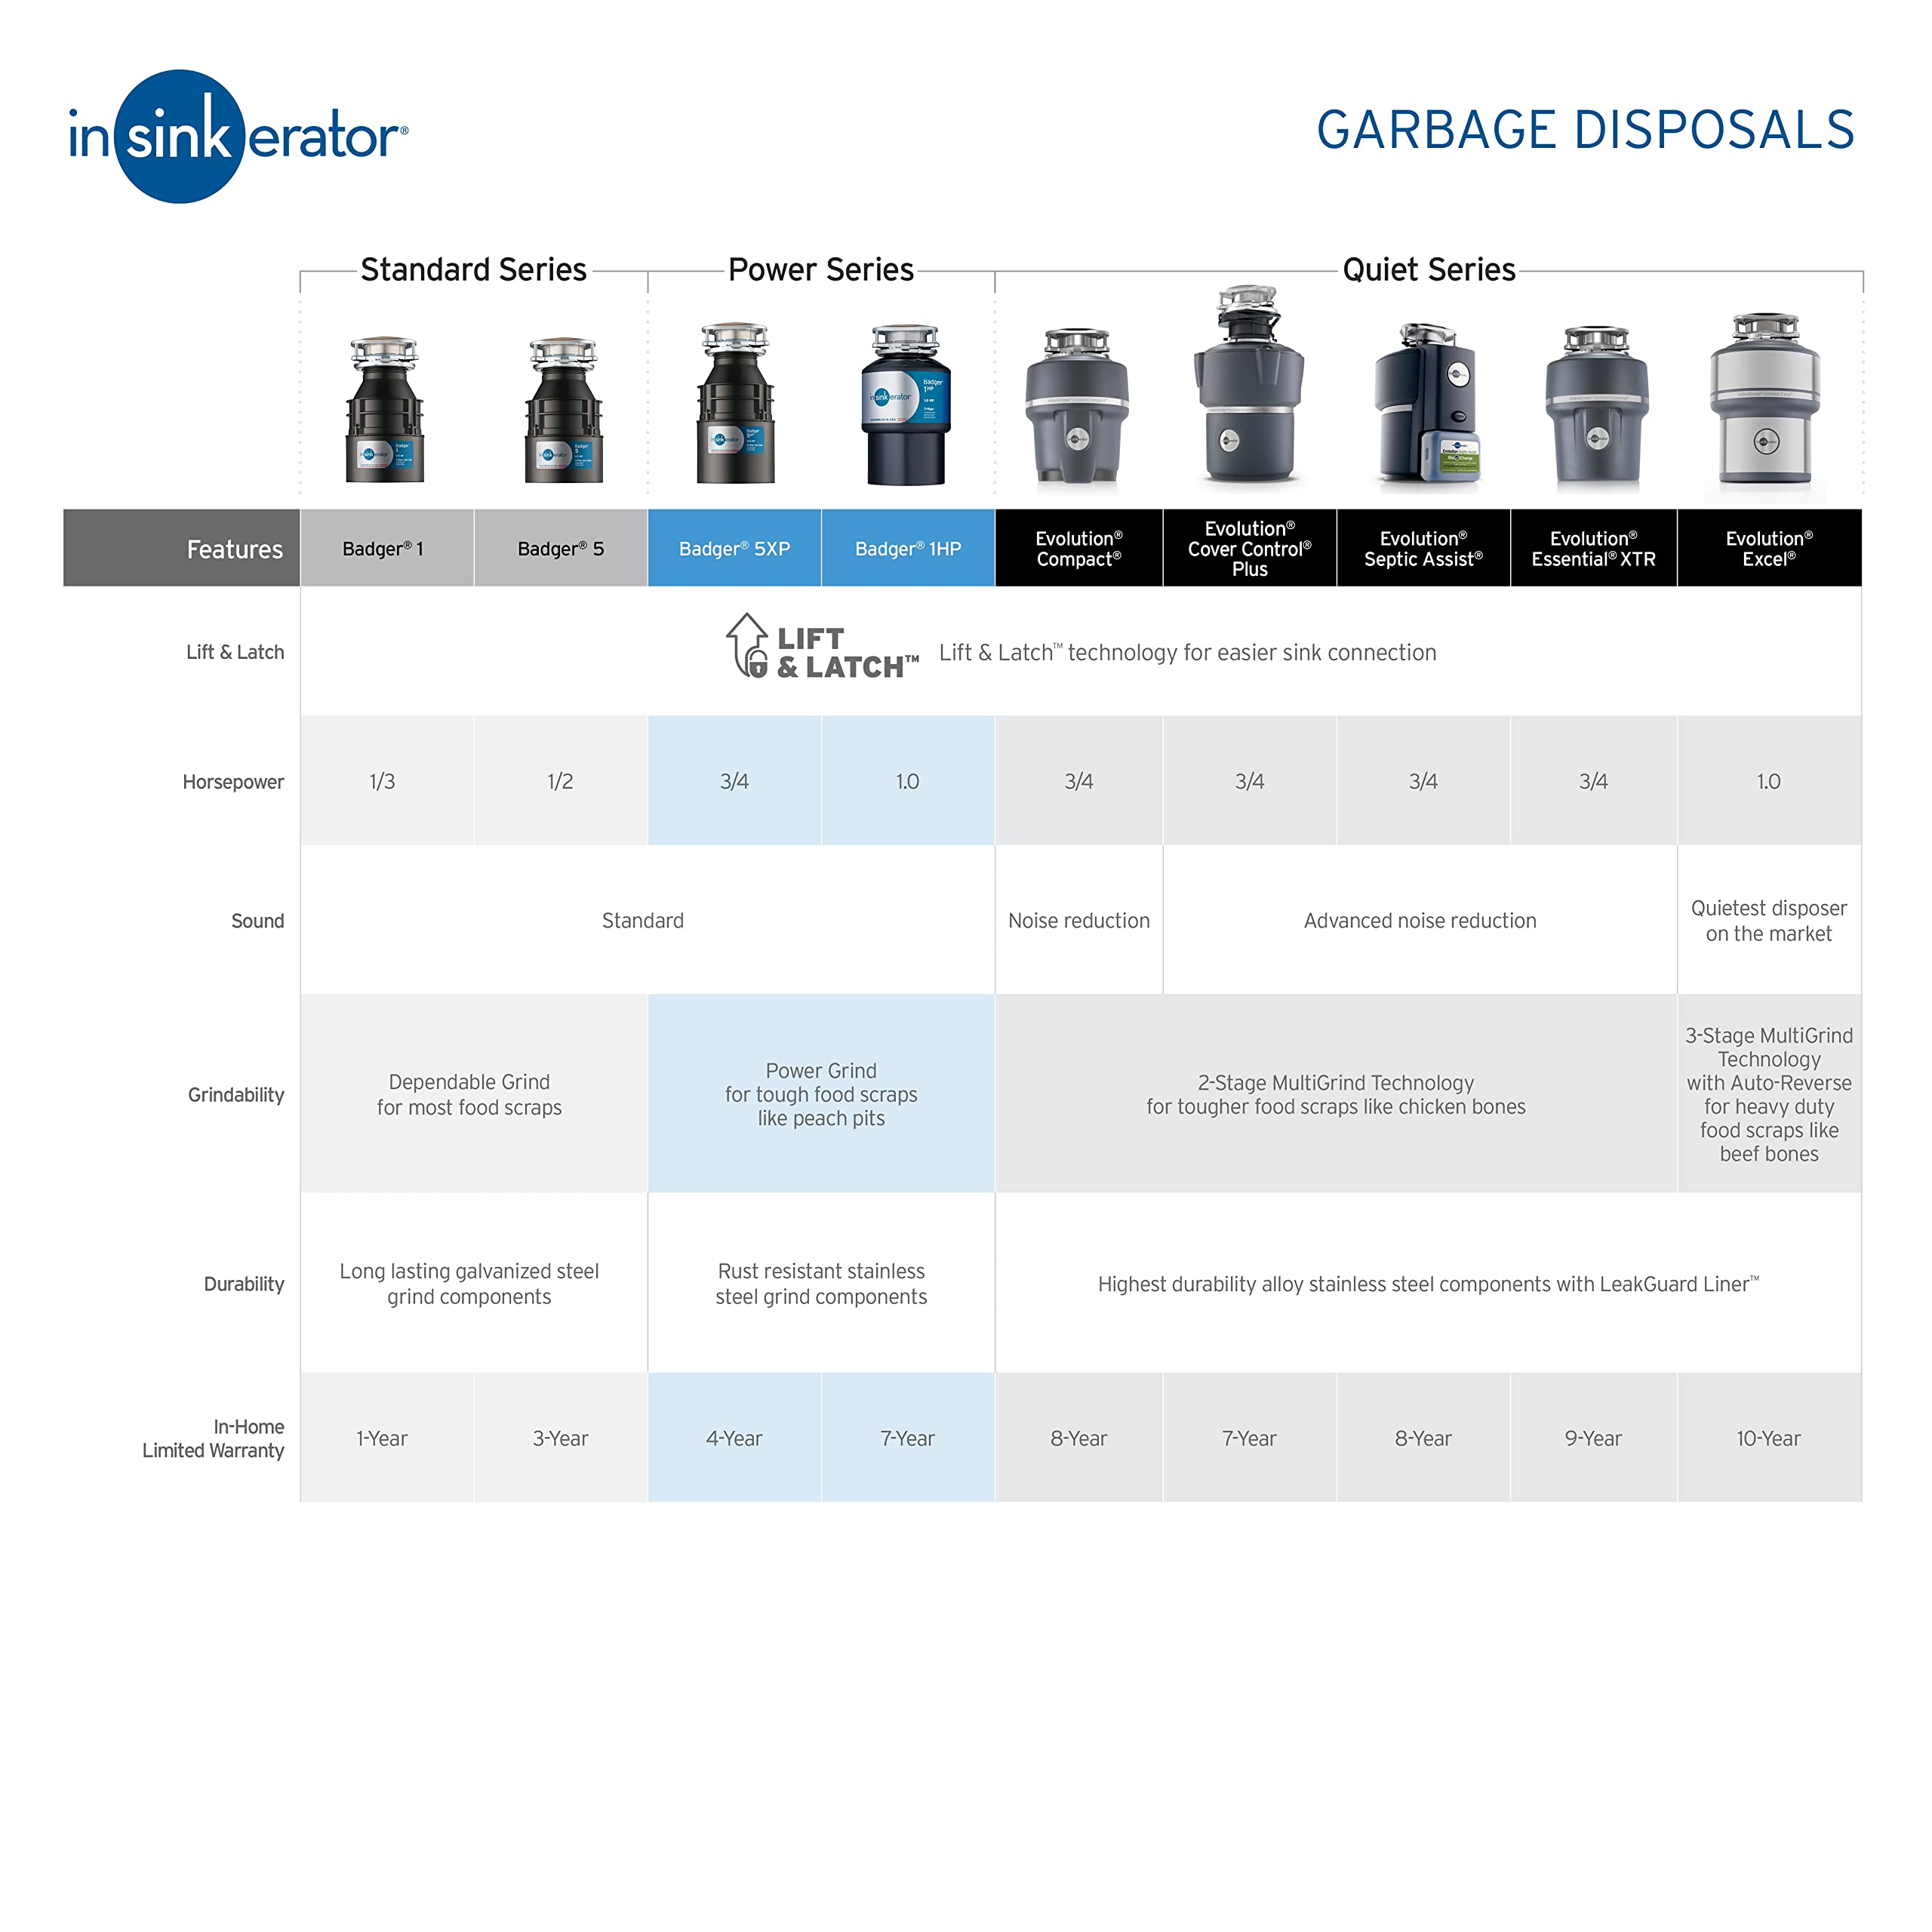 InSinkErator Garbage Disposal, Badger 5, Standard Series, 1/2 HP Continuous Feed, Black